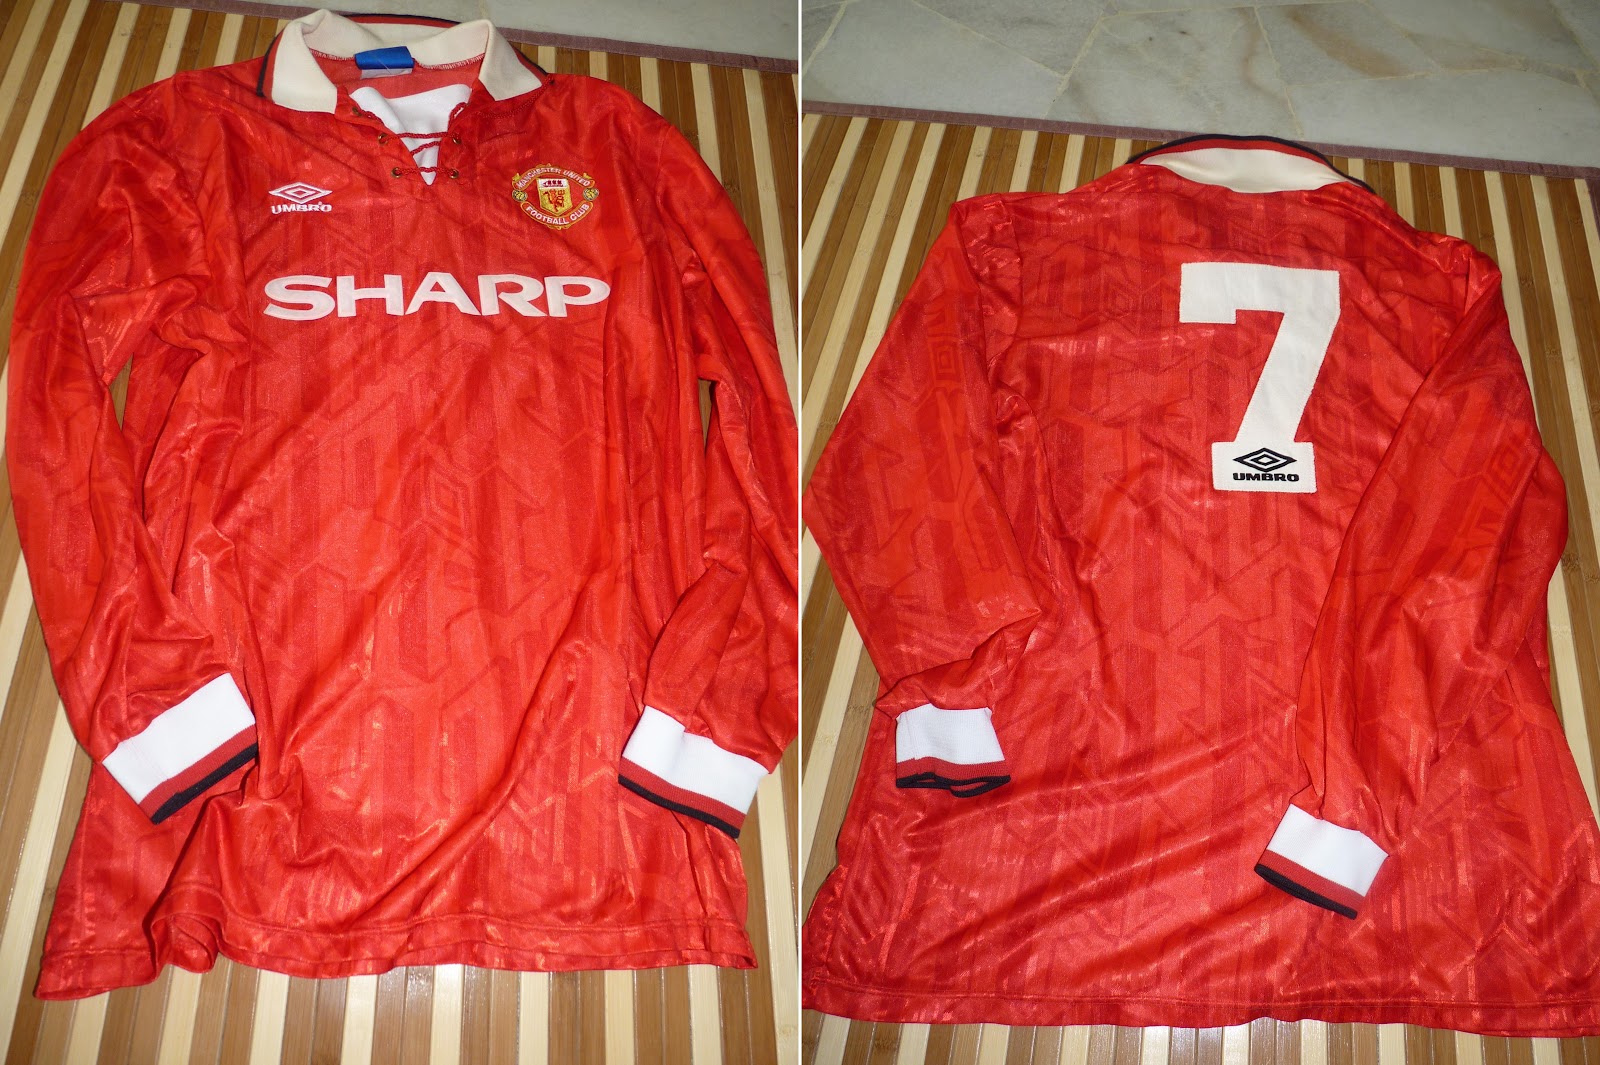 1992 Match Worn Shirts | Manchester United Shirts Collection